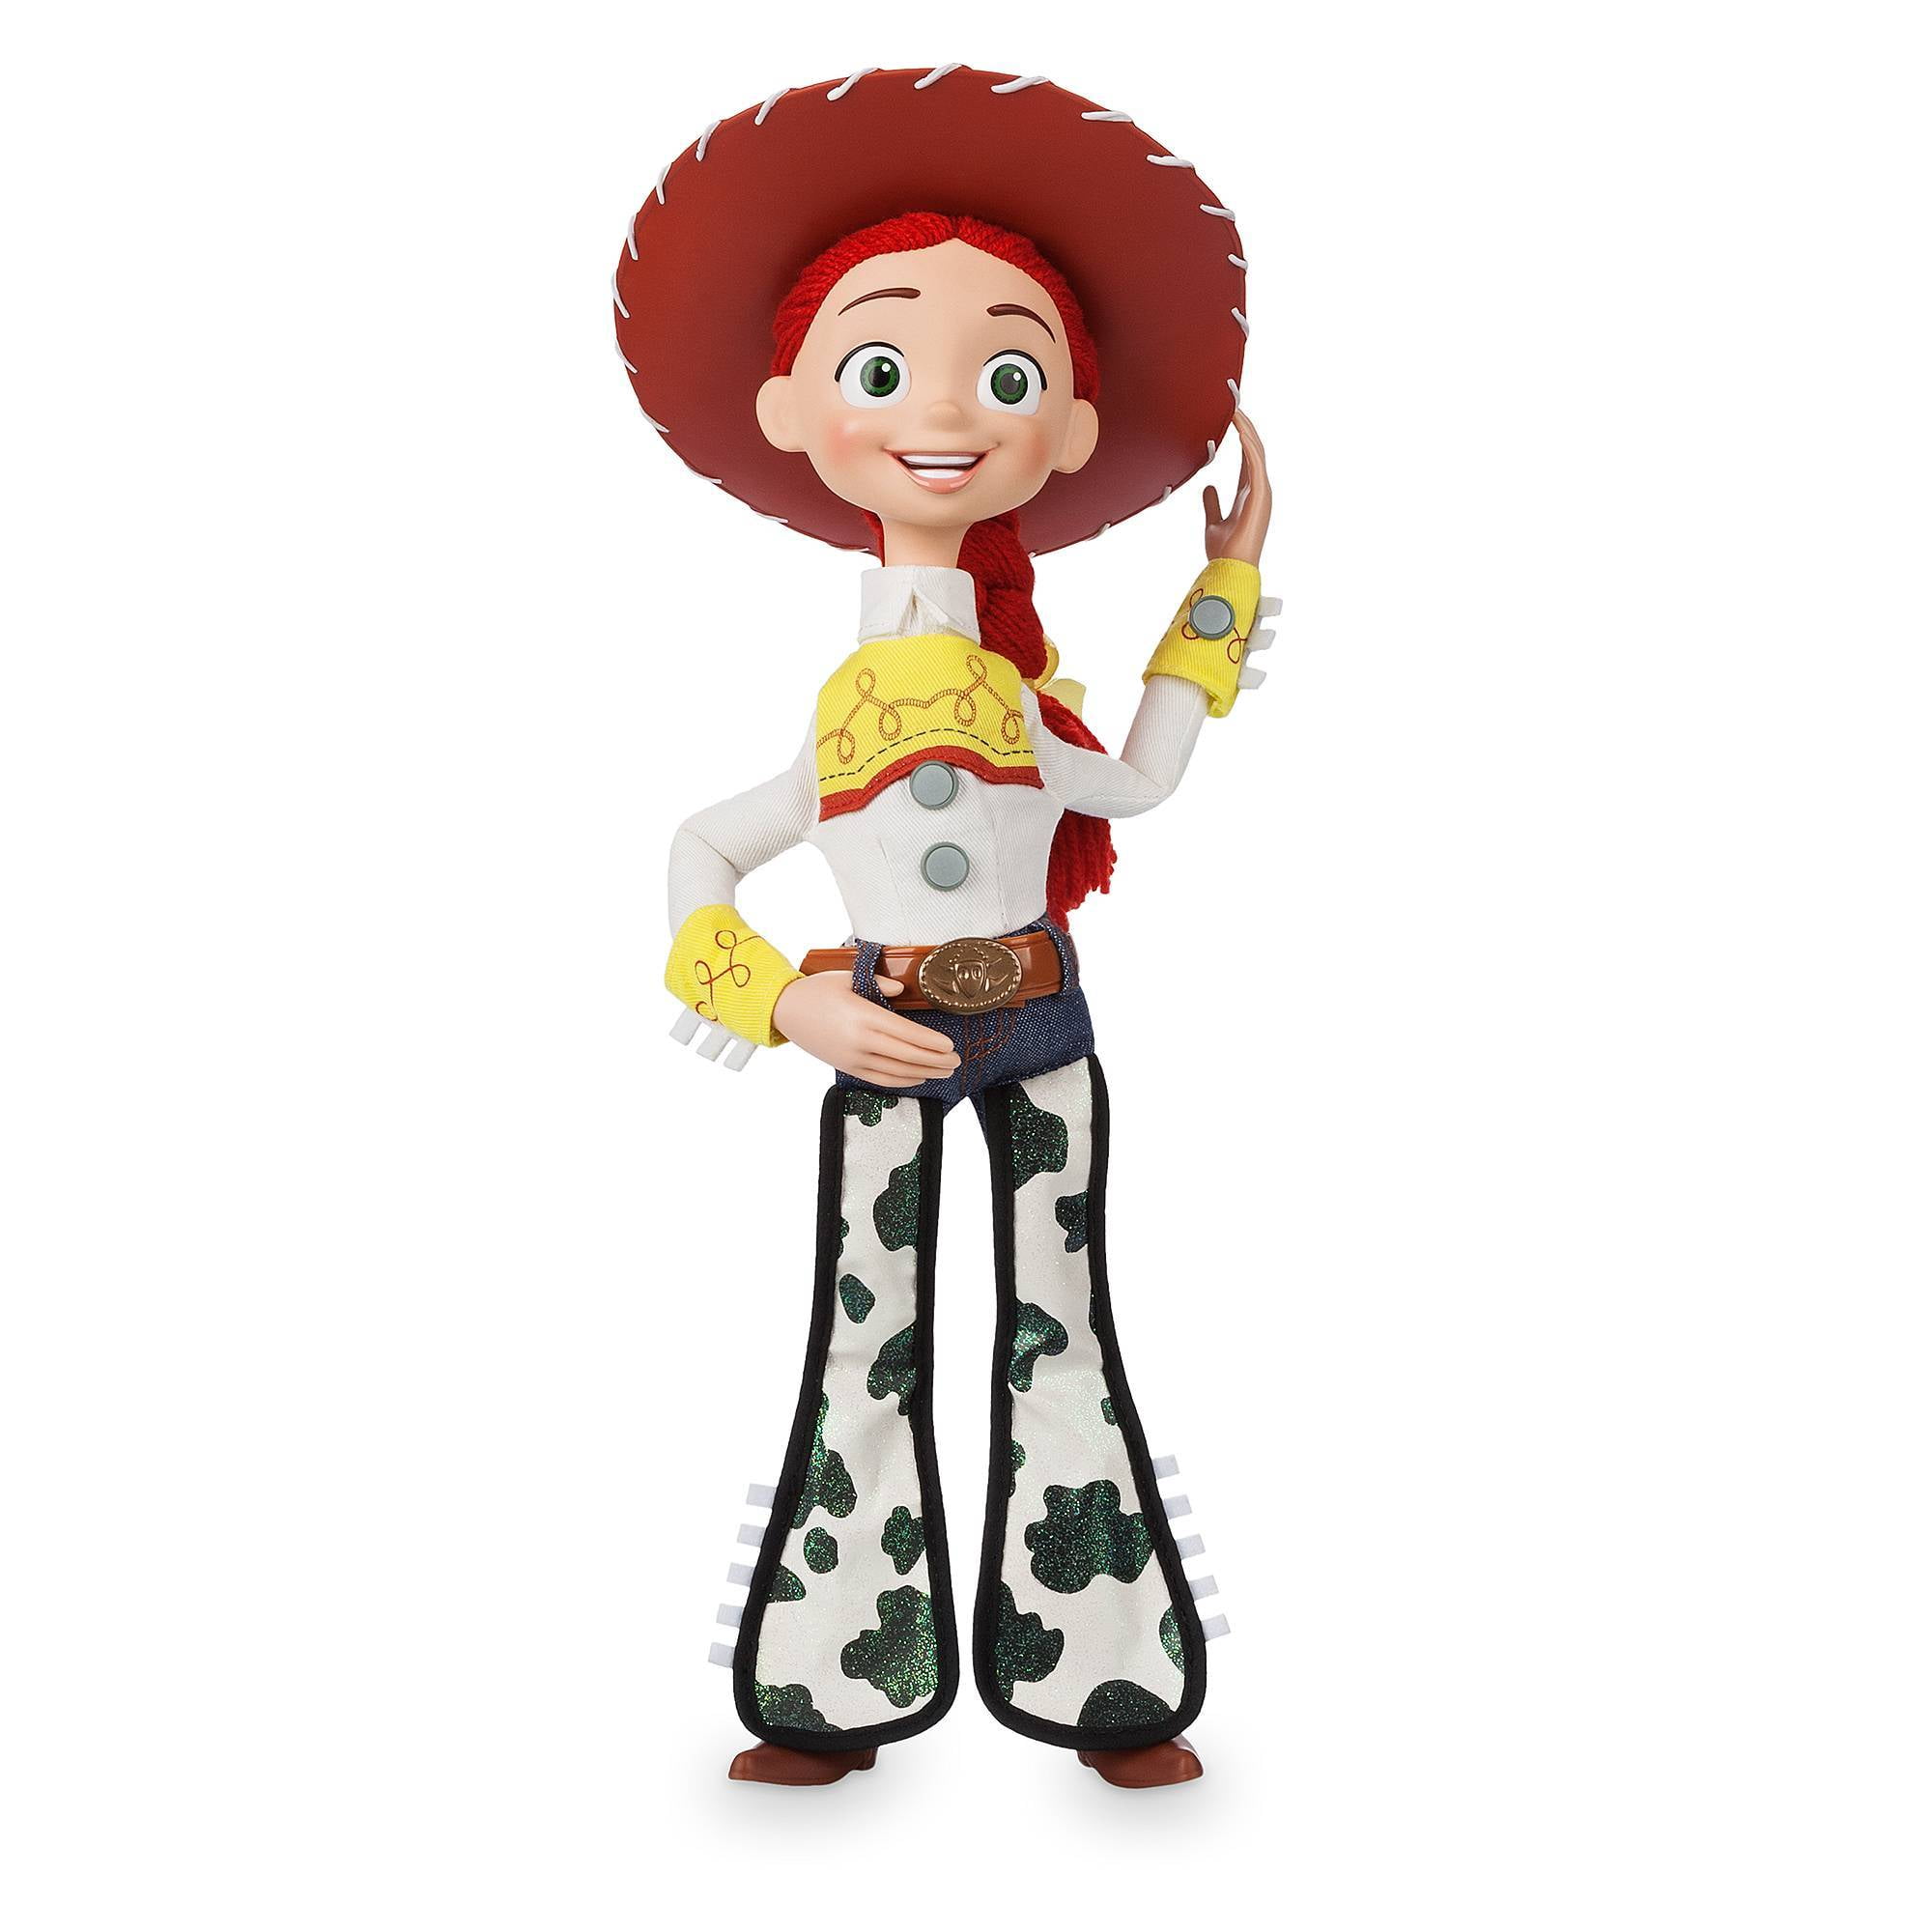 Toy Story 2 Pull String Talking Jessie Disney Pixar 1999 68027 for sale online 